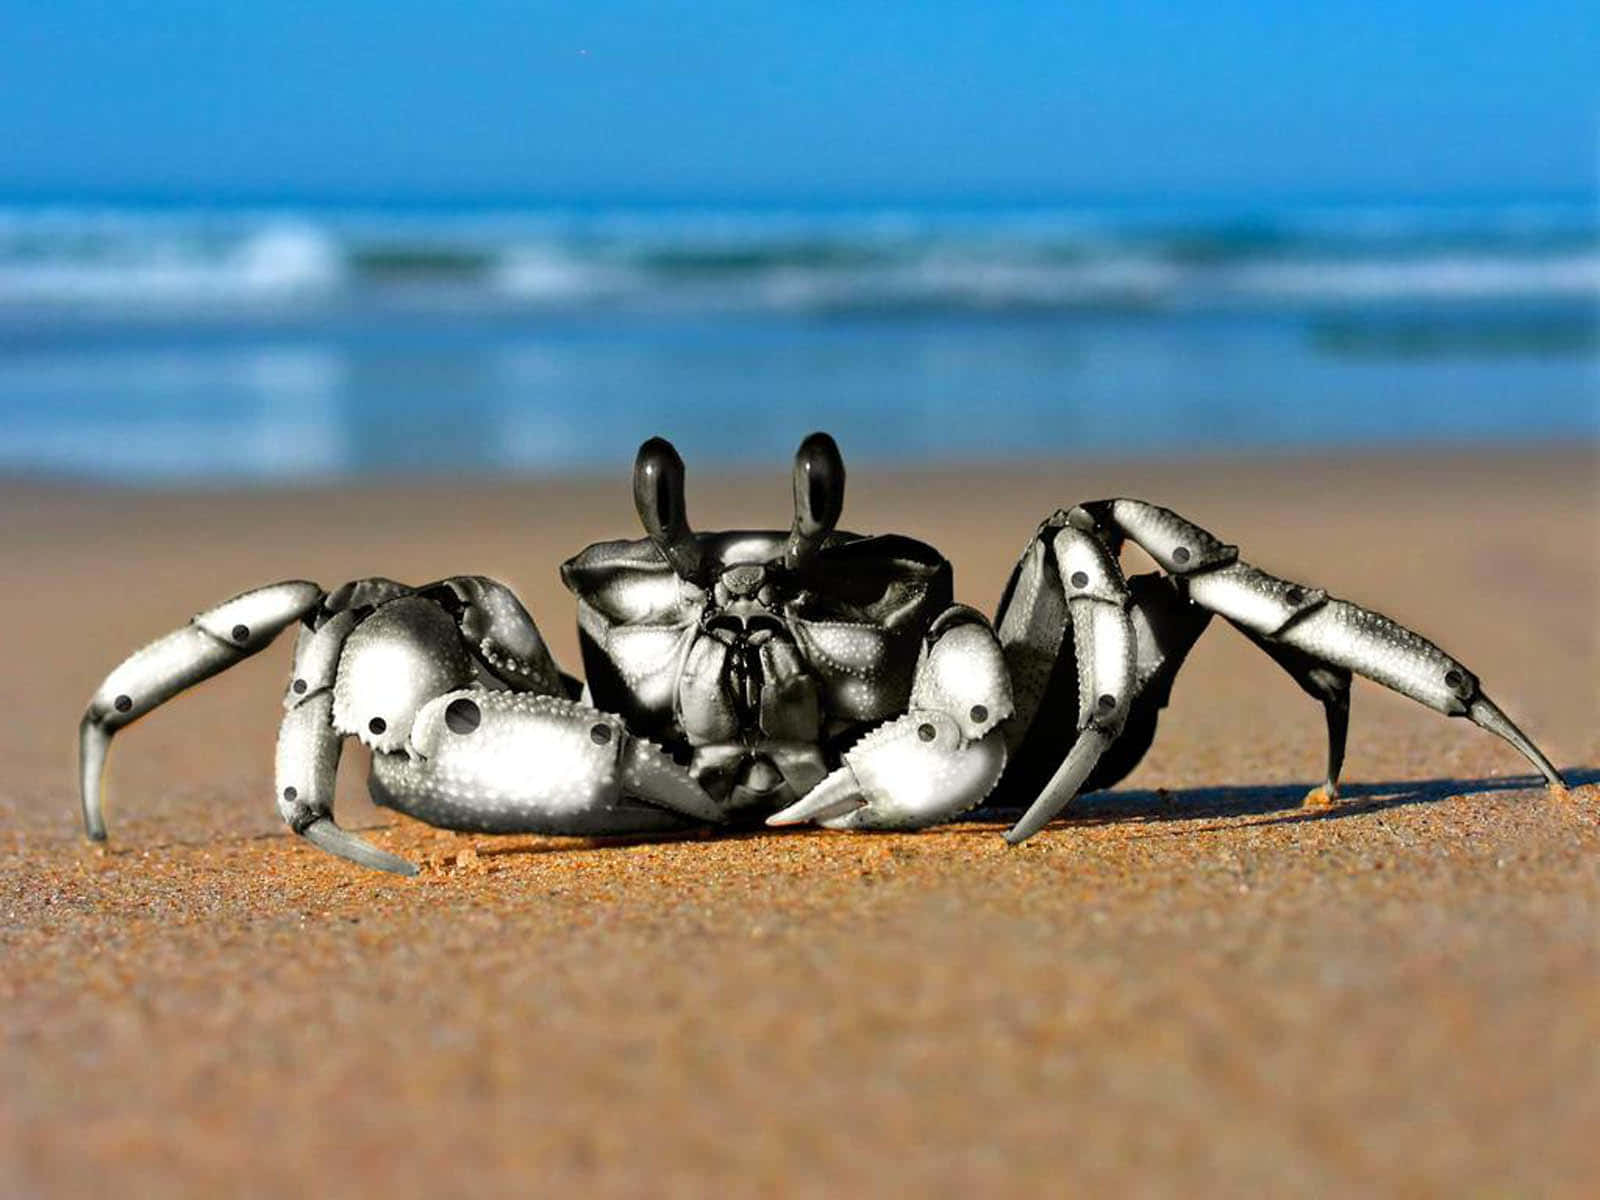 Cute crab enjoying its day.